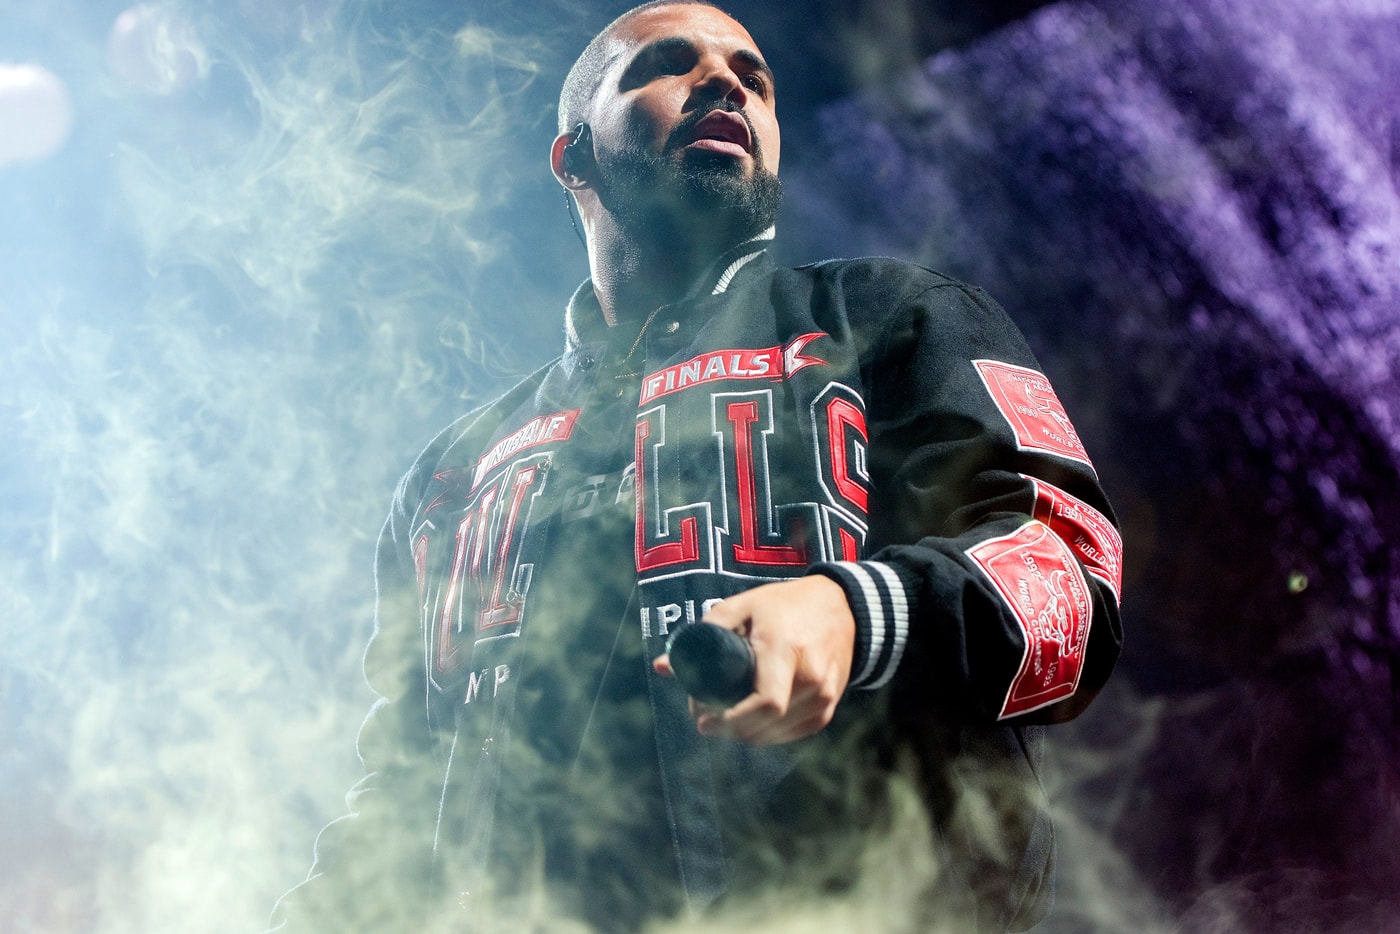 Drake God's Plan Longest Standing Billboard Hot 100 #1 Track Record Break